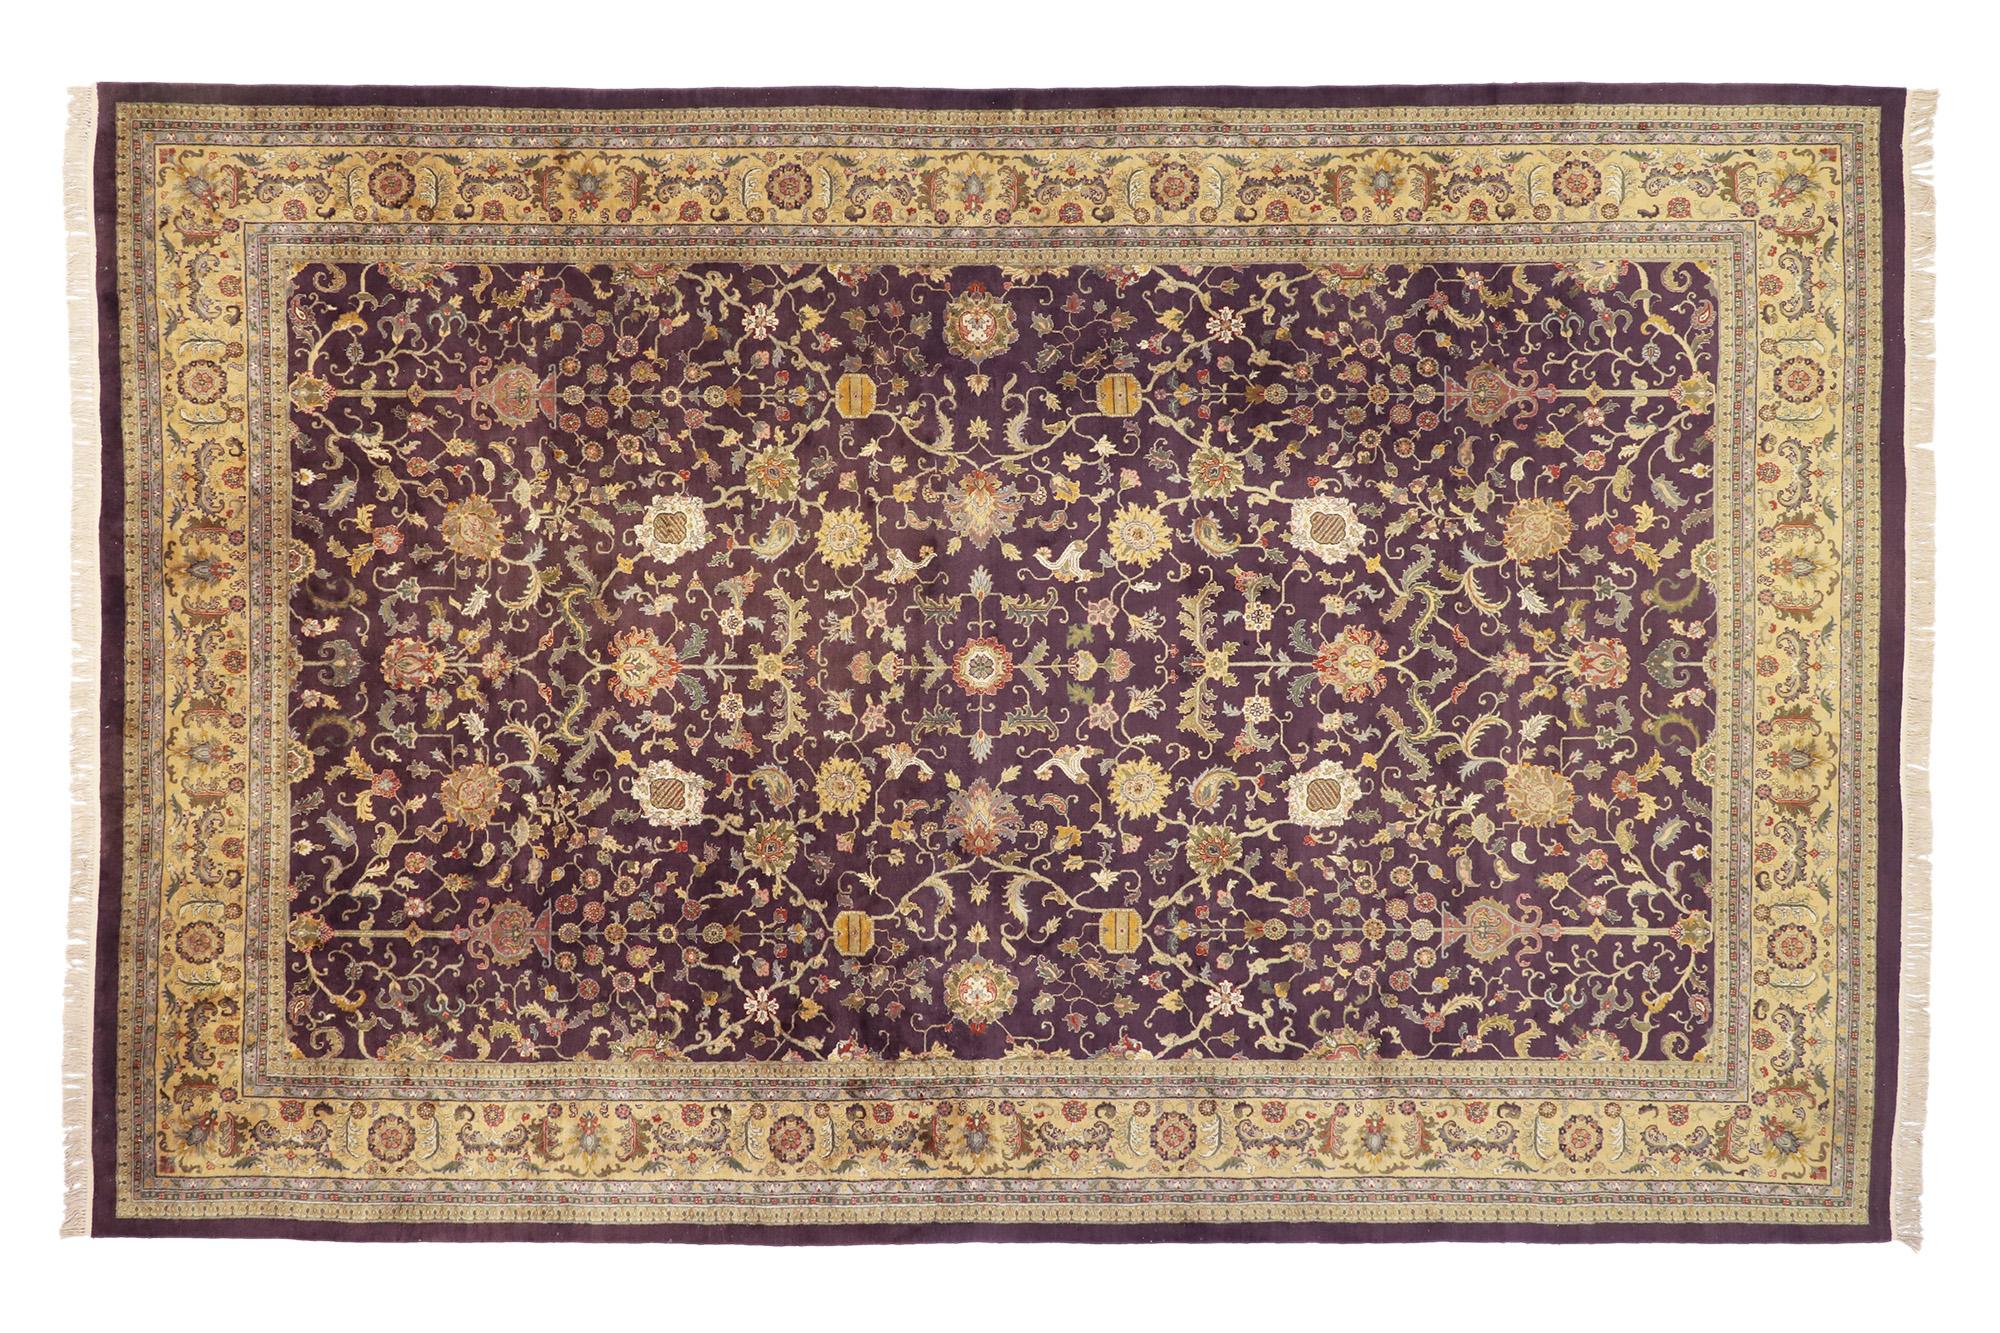 Vintage Aubergine Indian Palatial Carpet, 11'03 x 17'08 For Sale 3